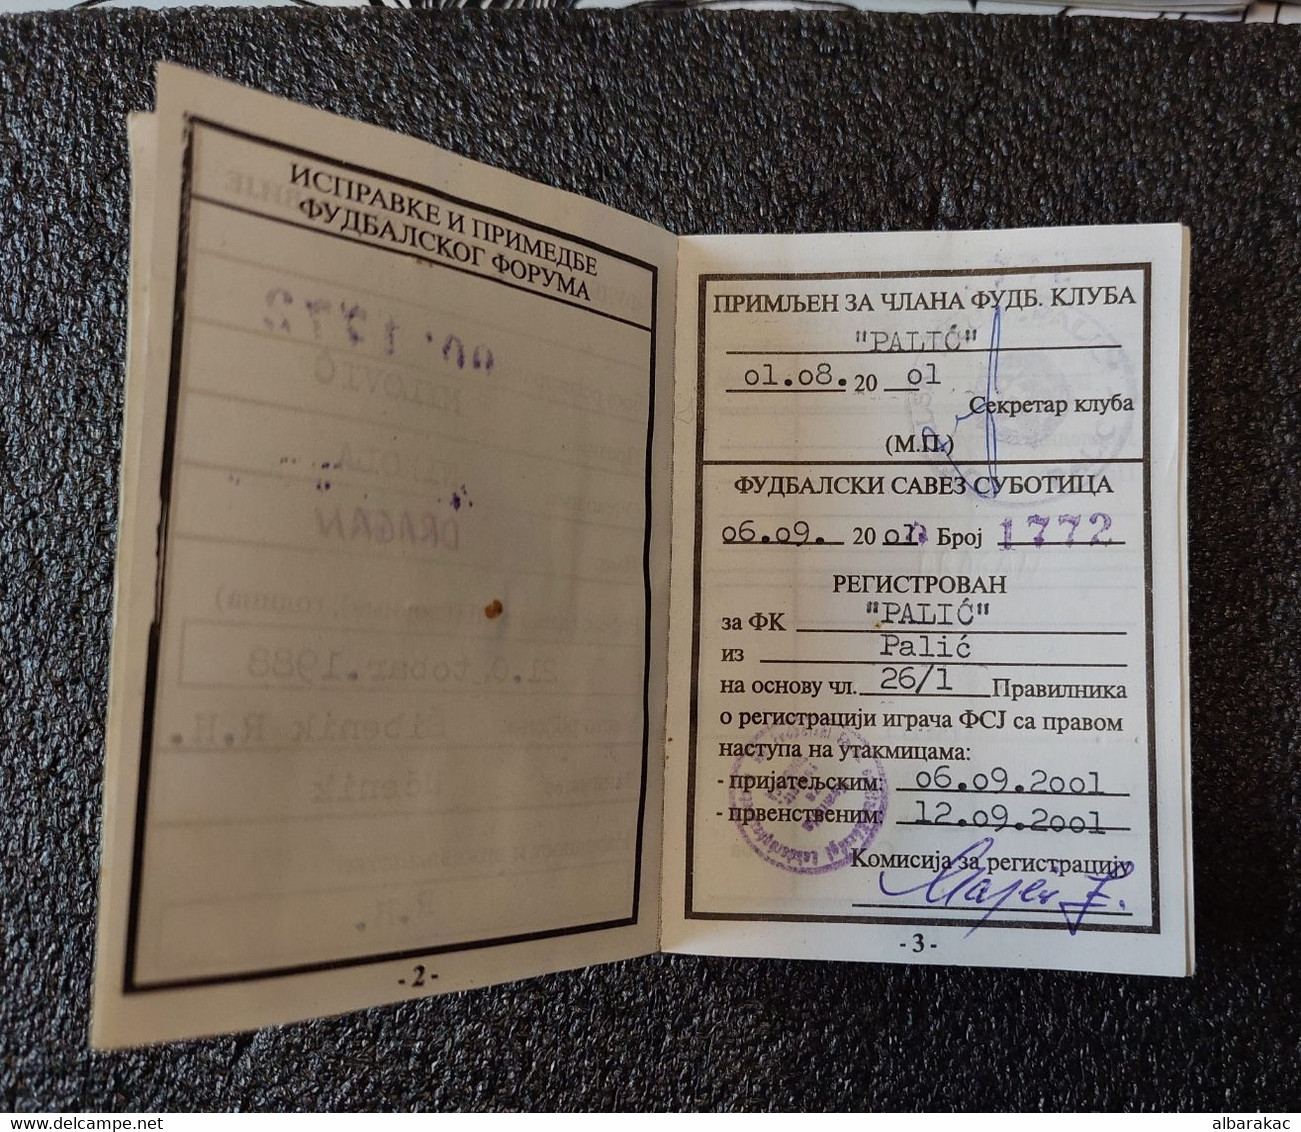 Football Soccer Union Yugoslavia Vojvodina ,Subotica Palic - ID Card With Photo - Apparel, Souvenirs & Other